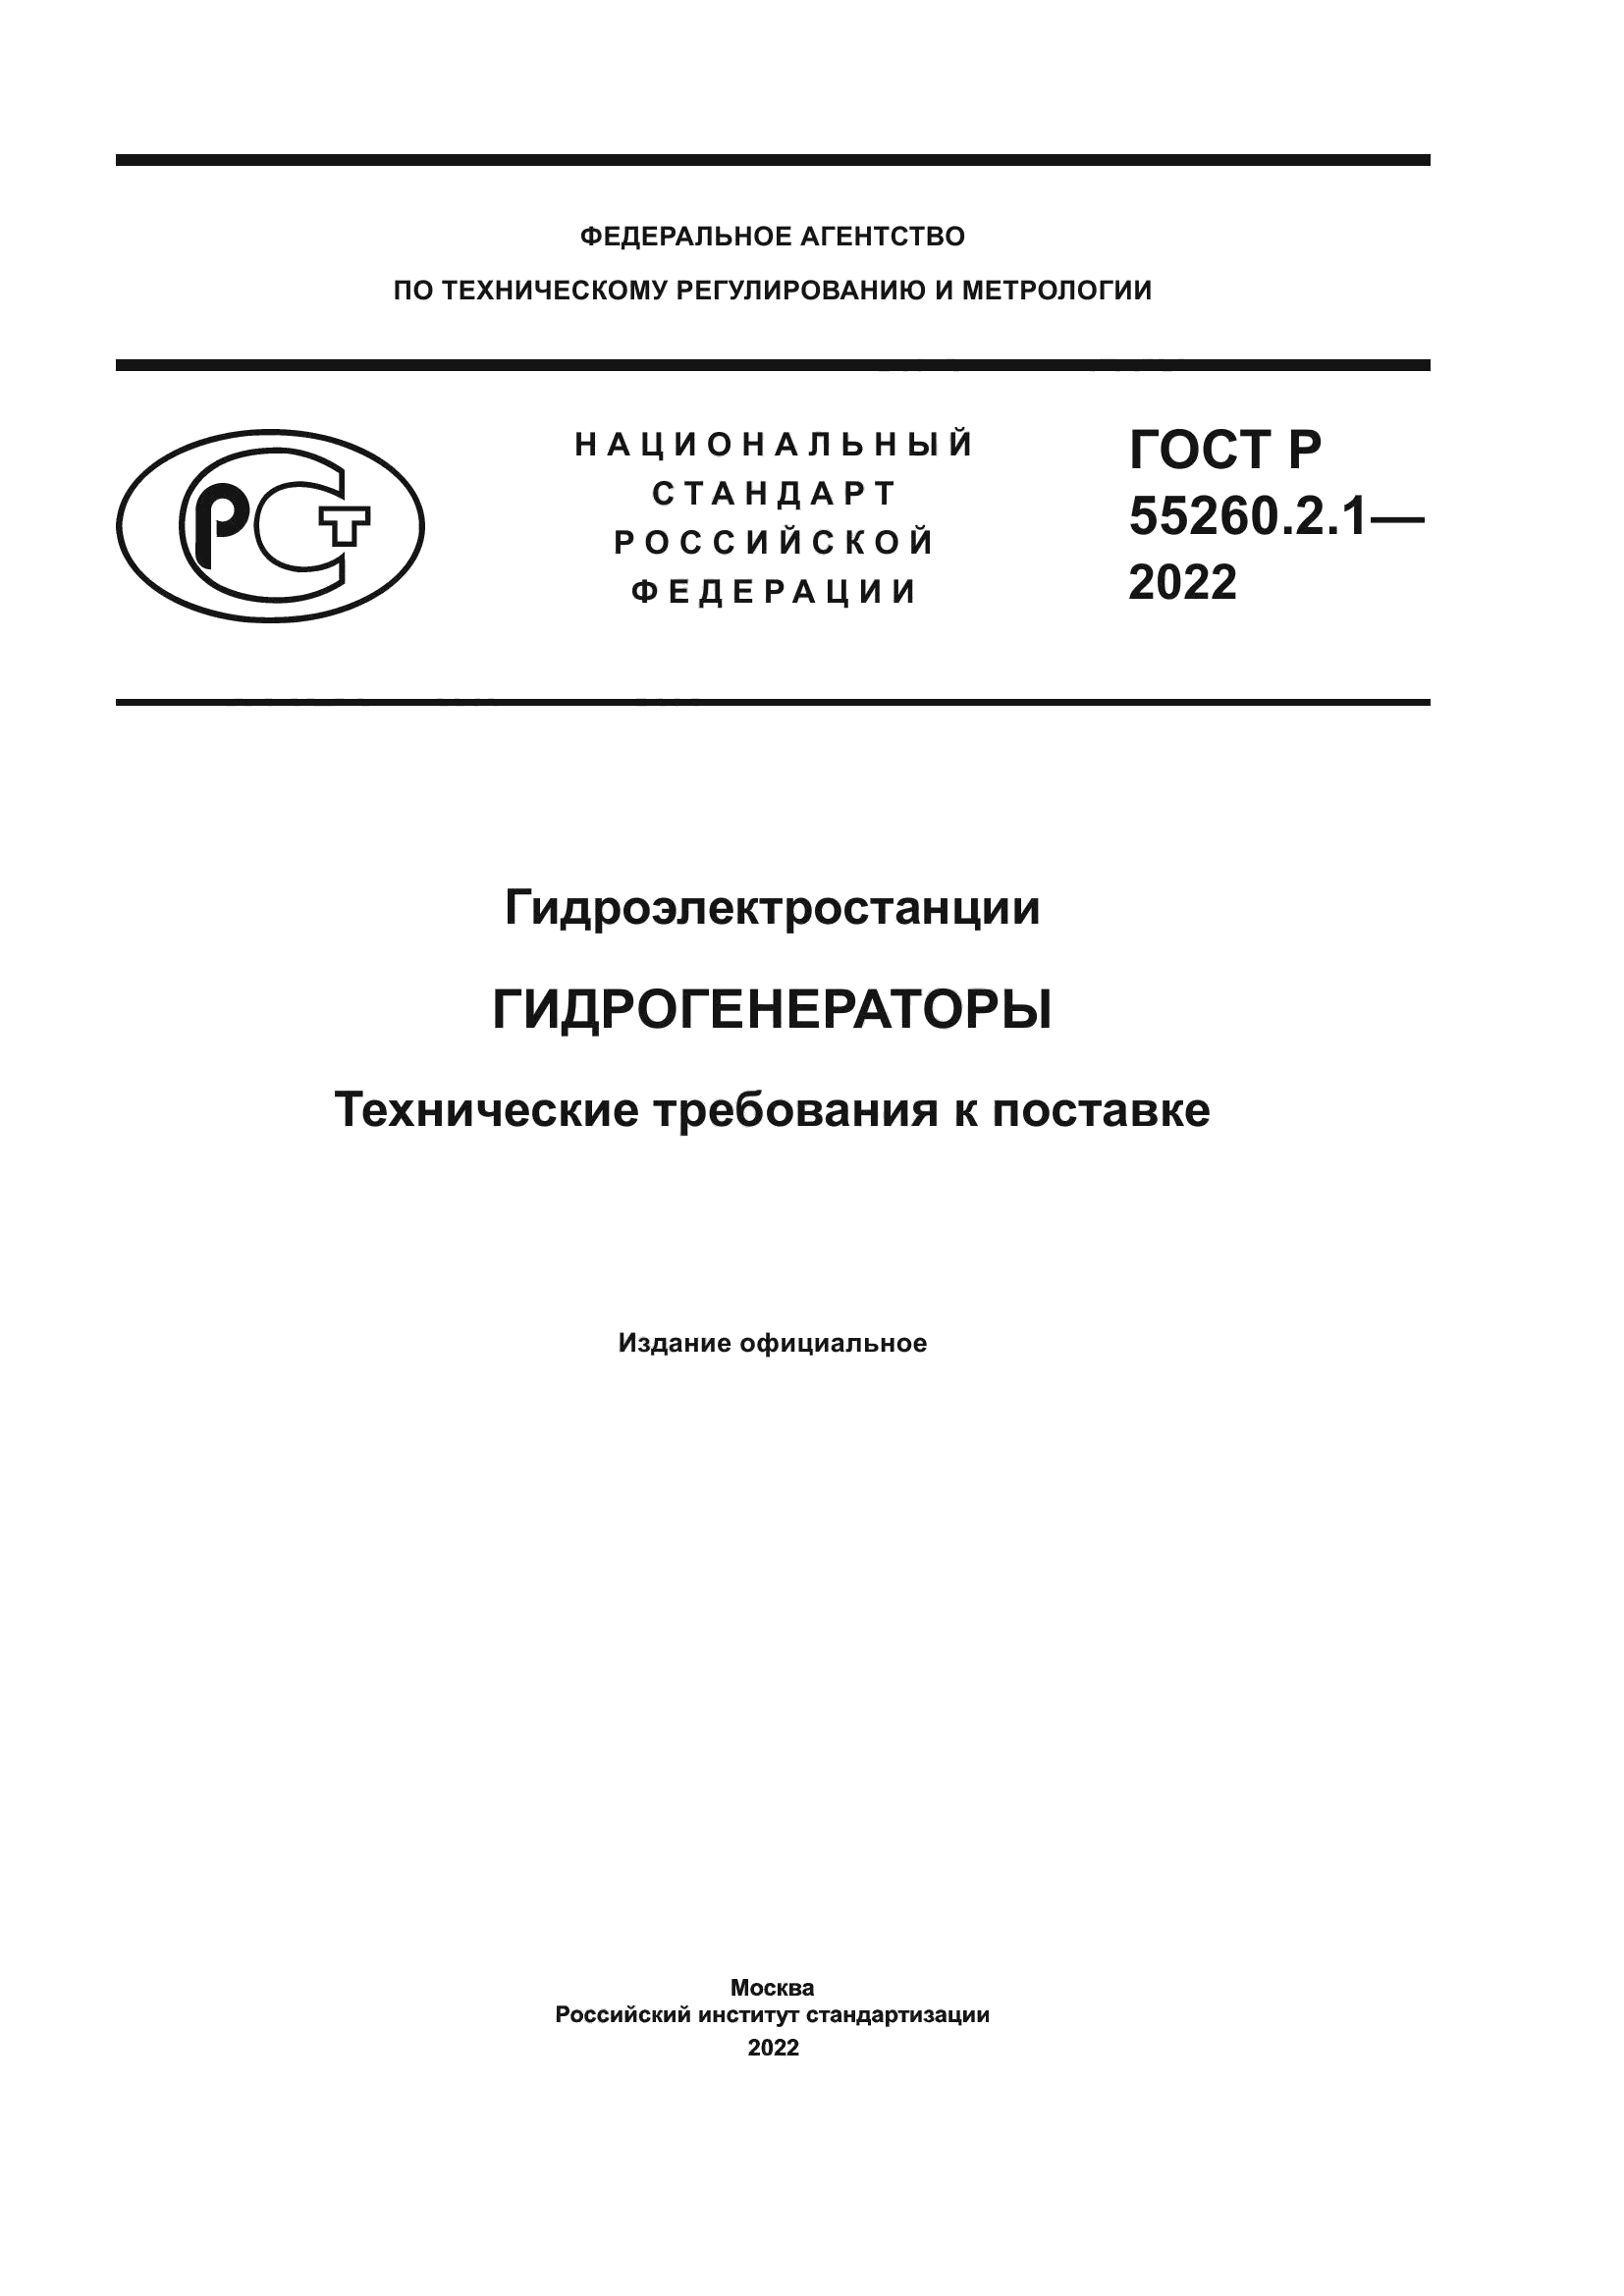 ГОСТ Р 55260.2.1-2022